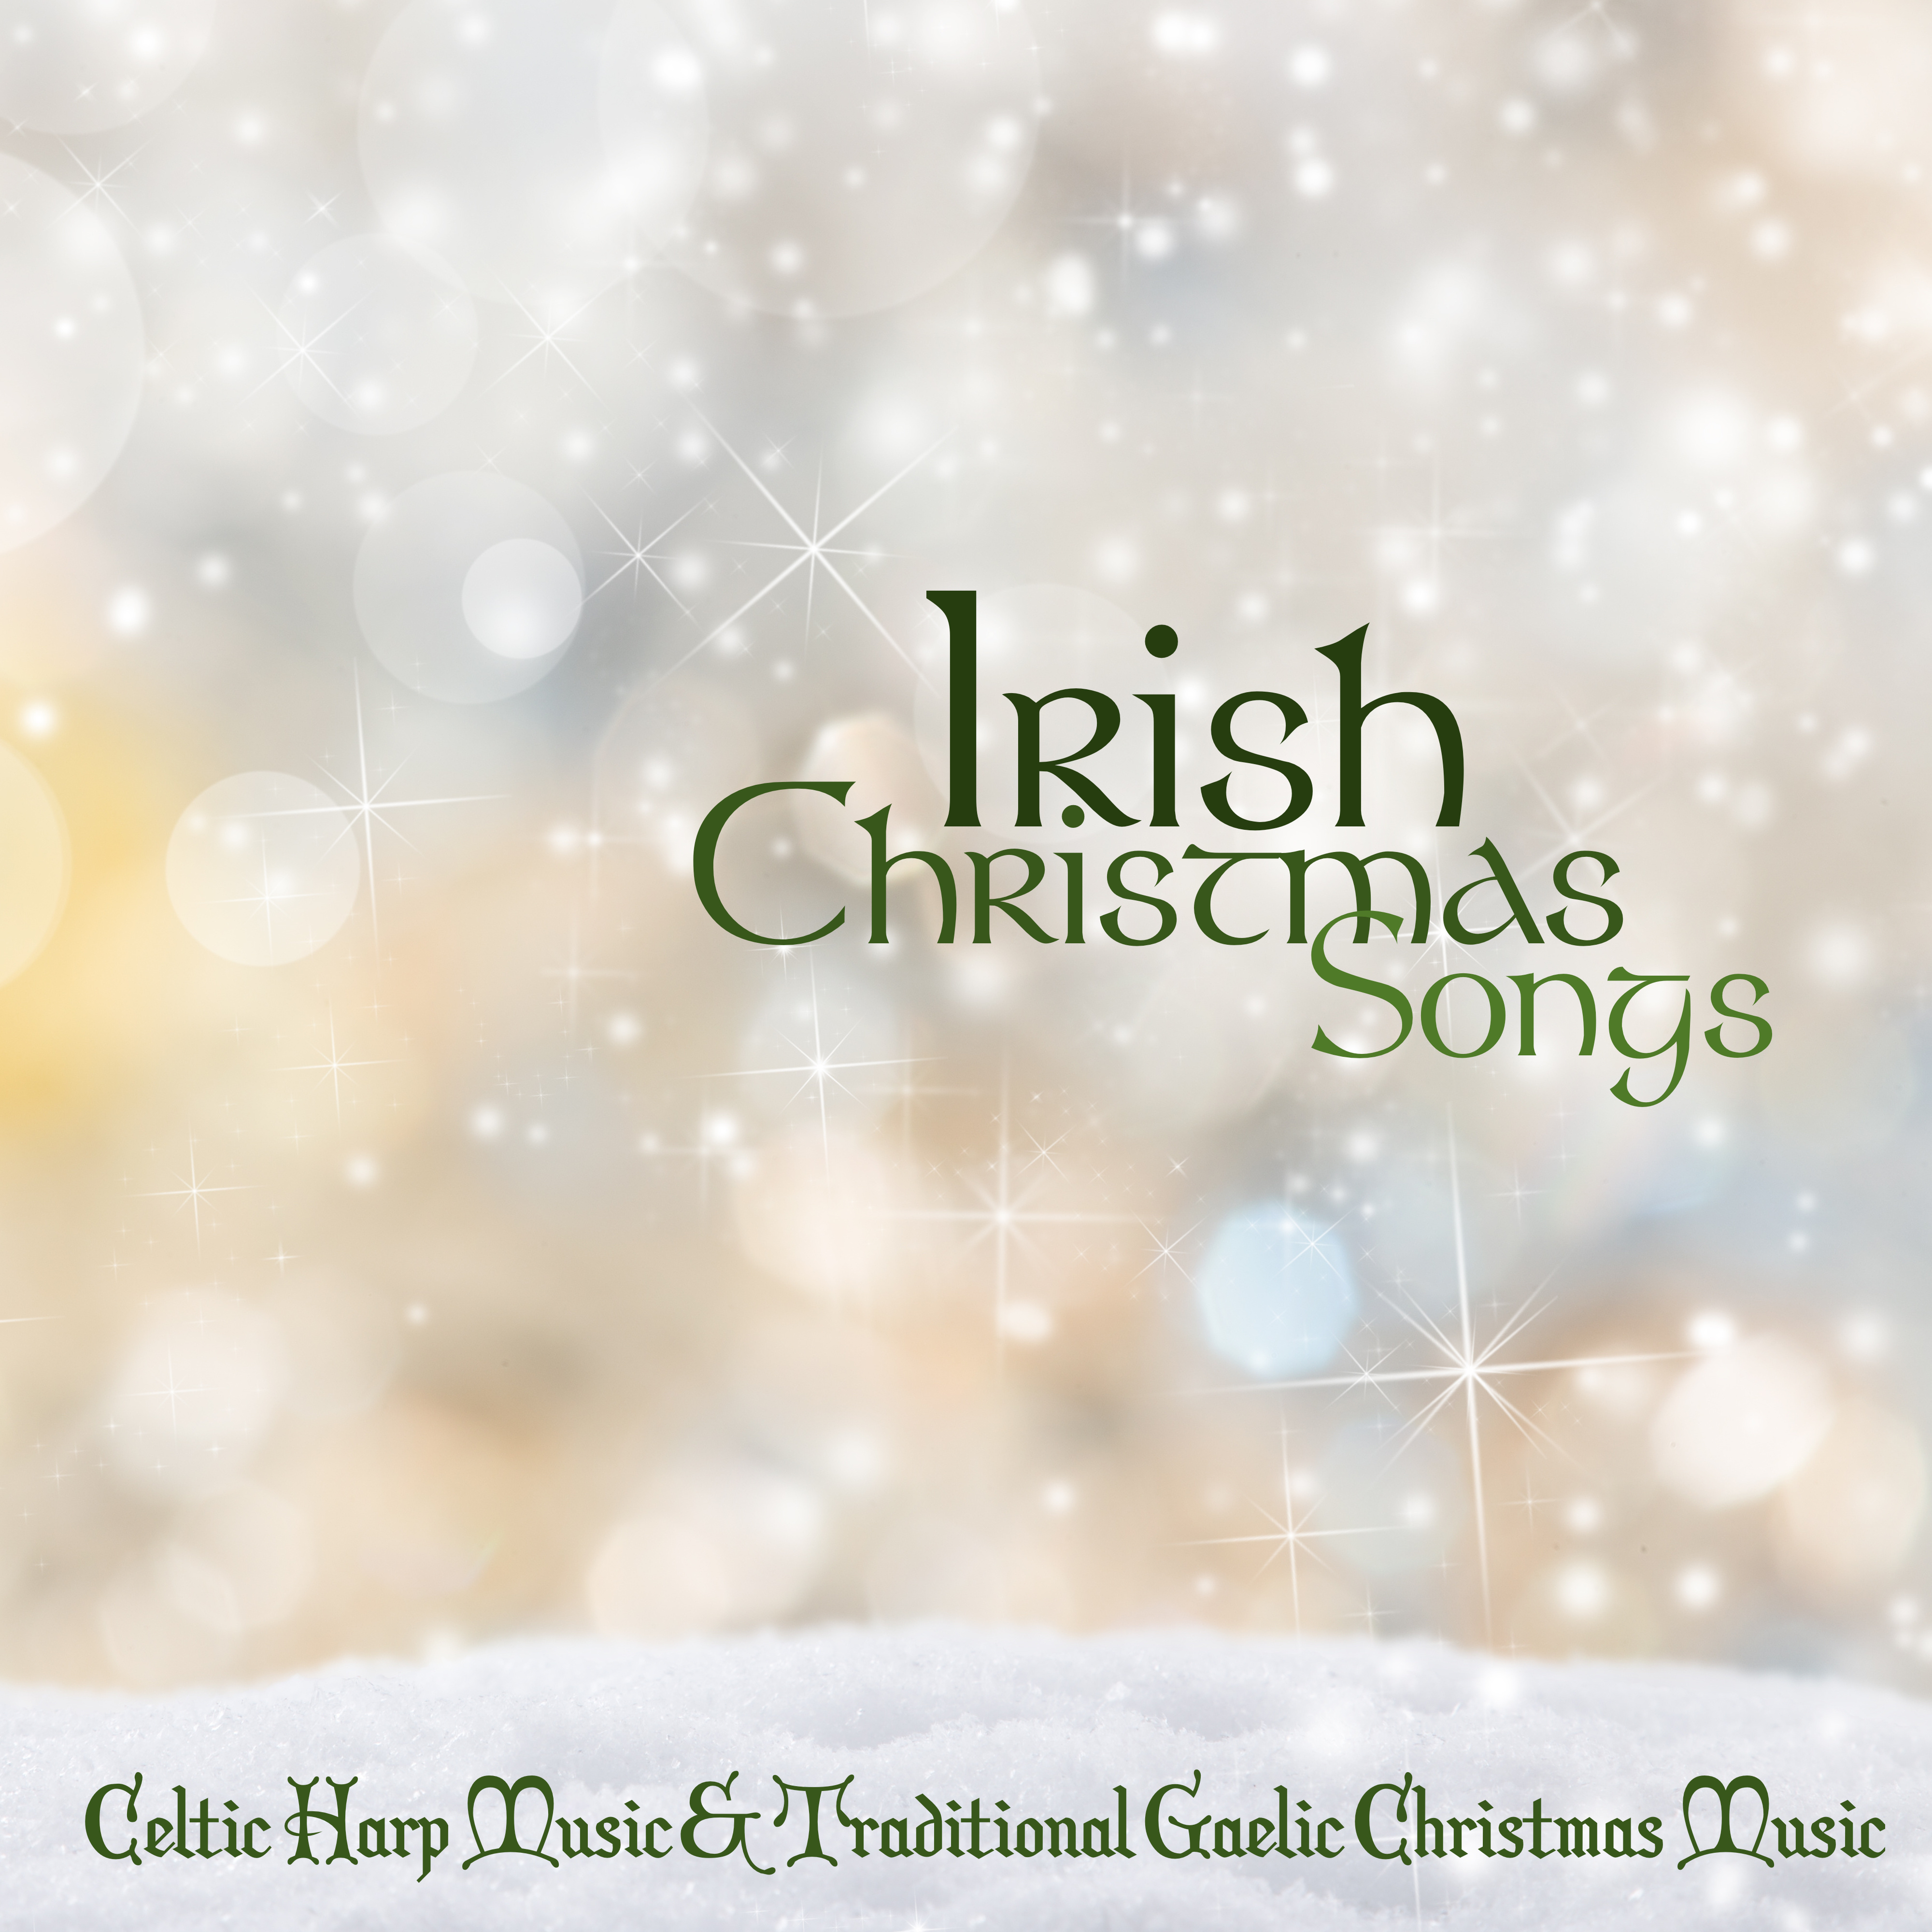 First Christmas - Irish Traditions